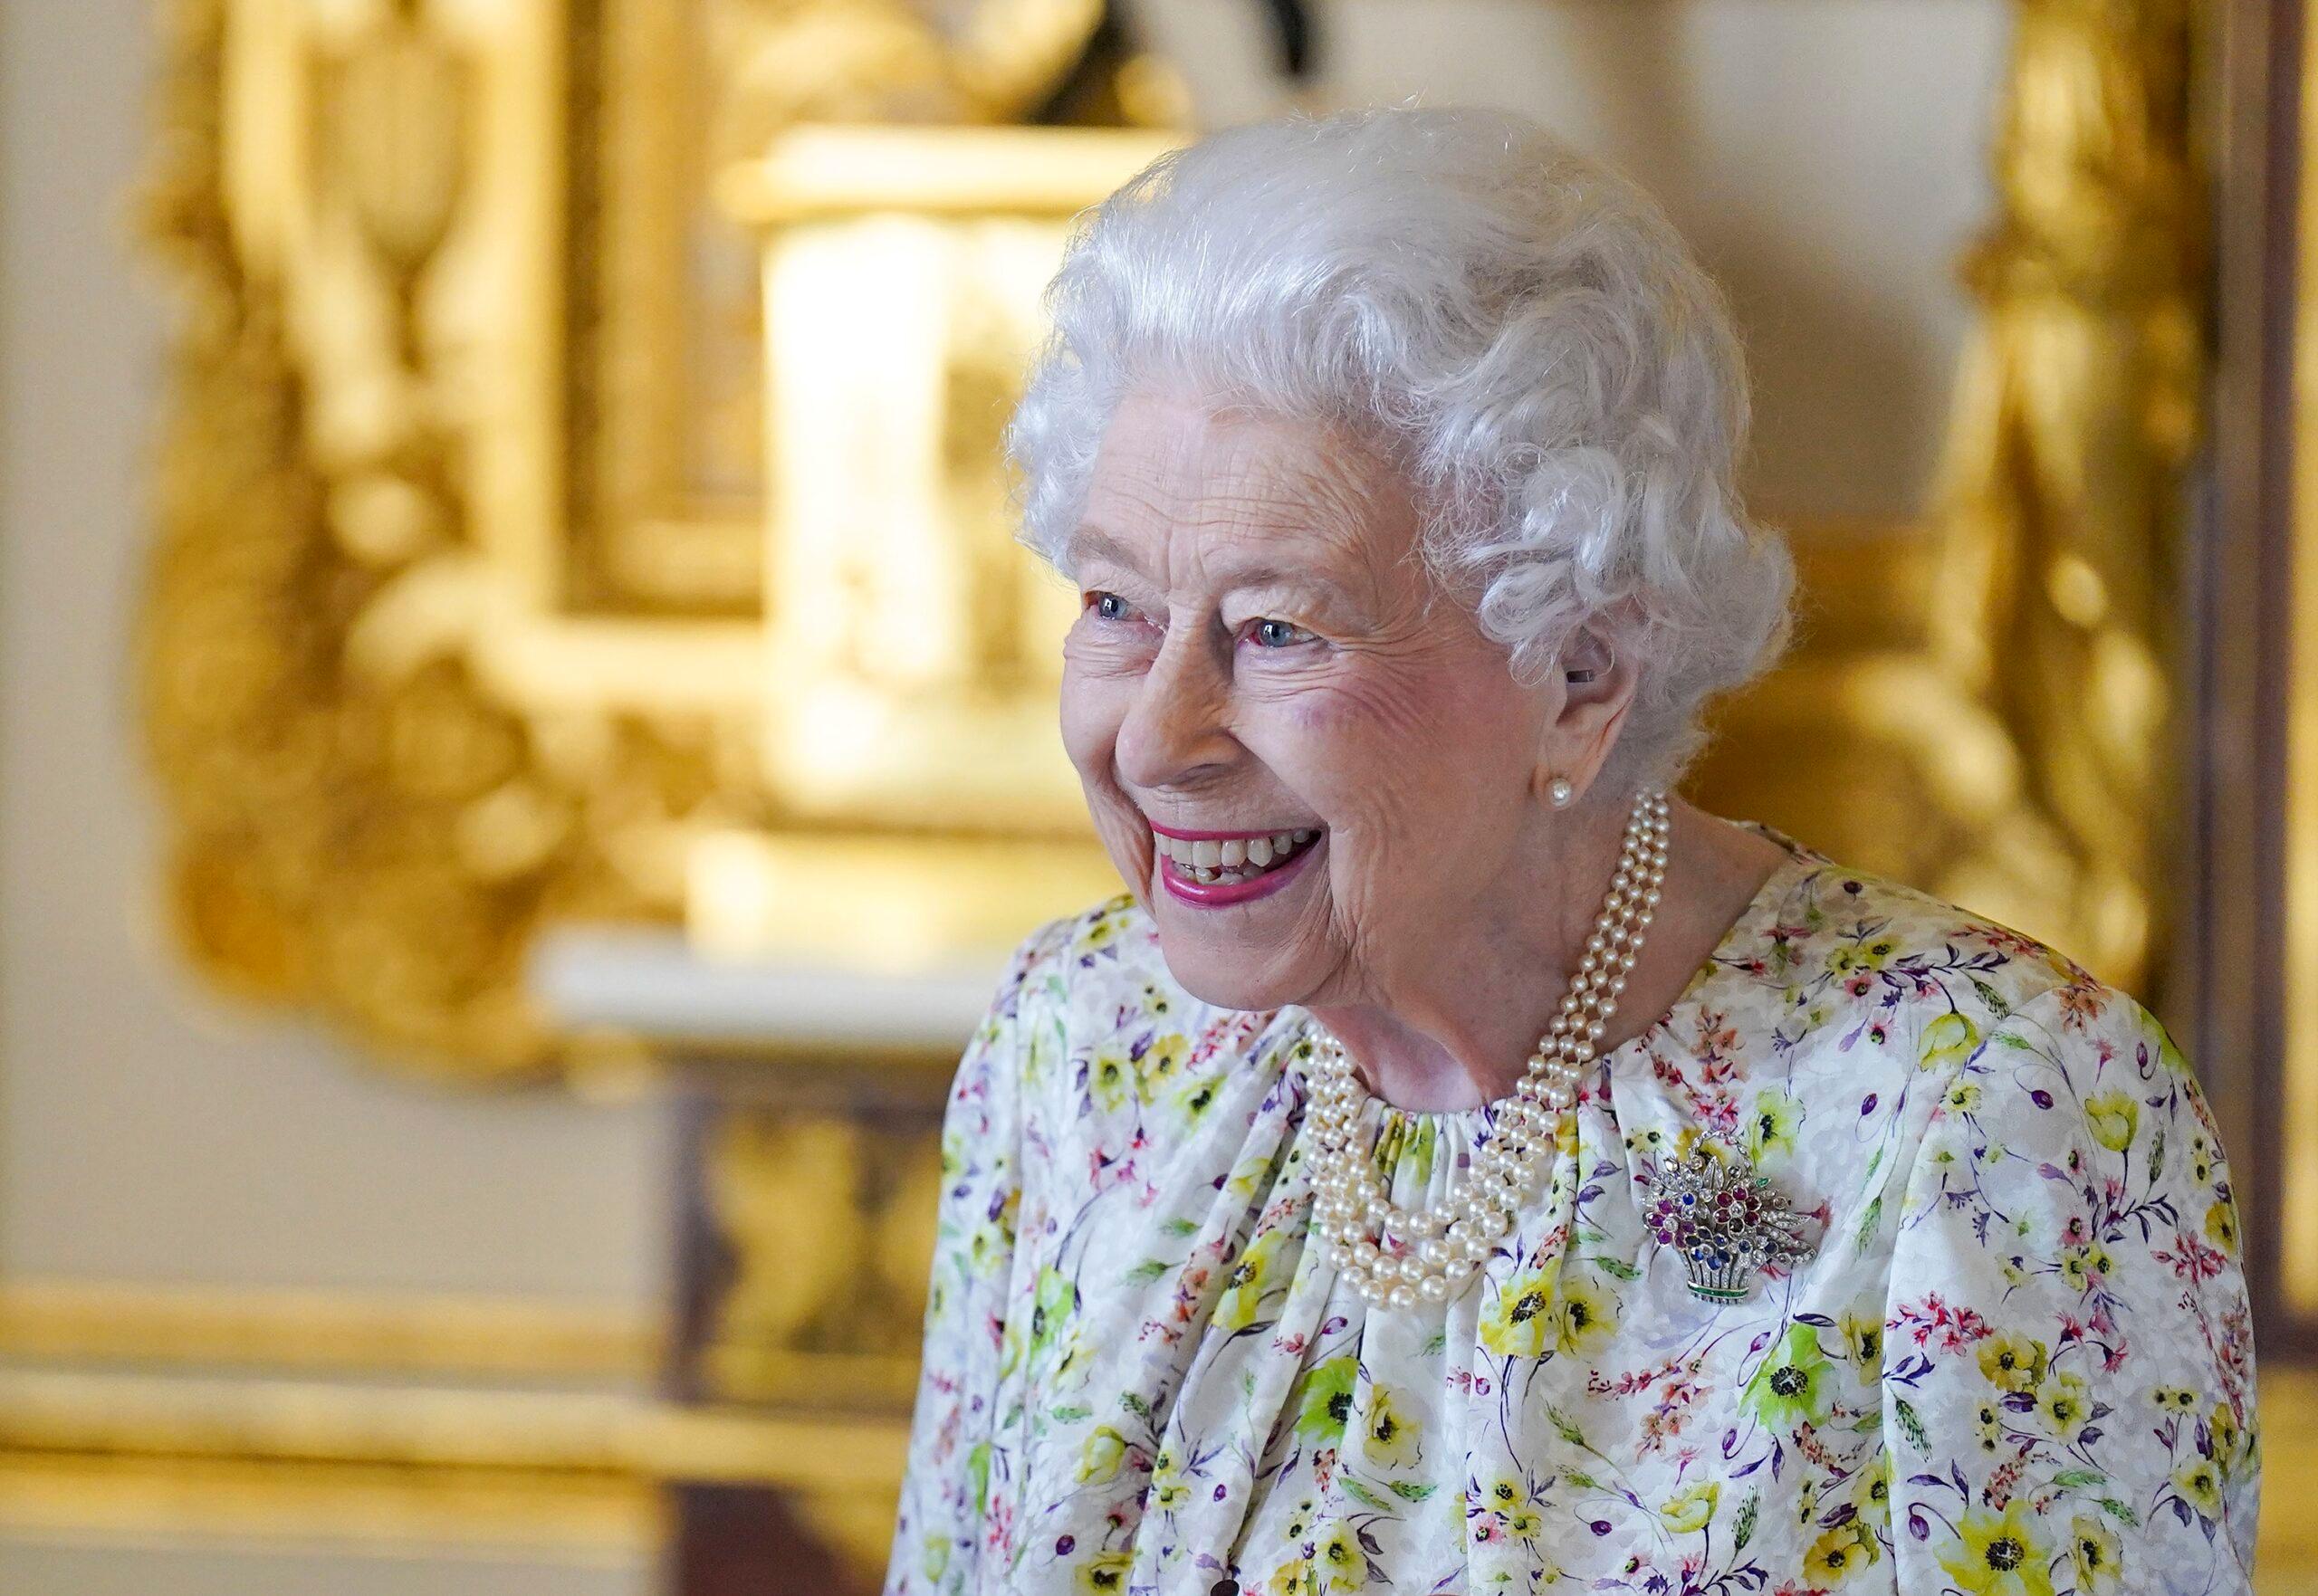 The Queen turns 96!